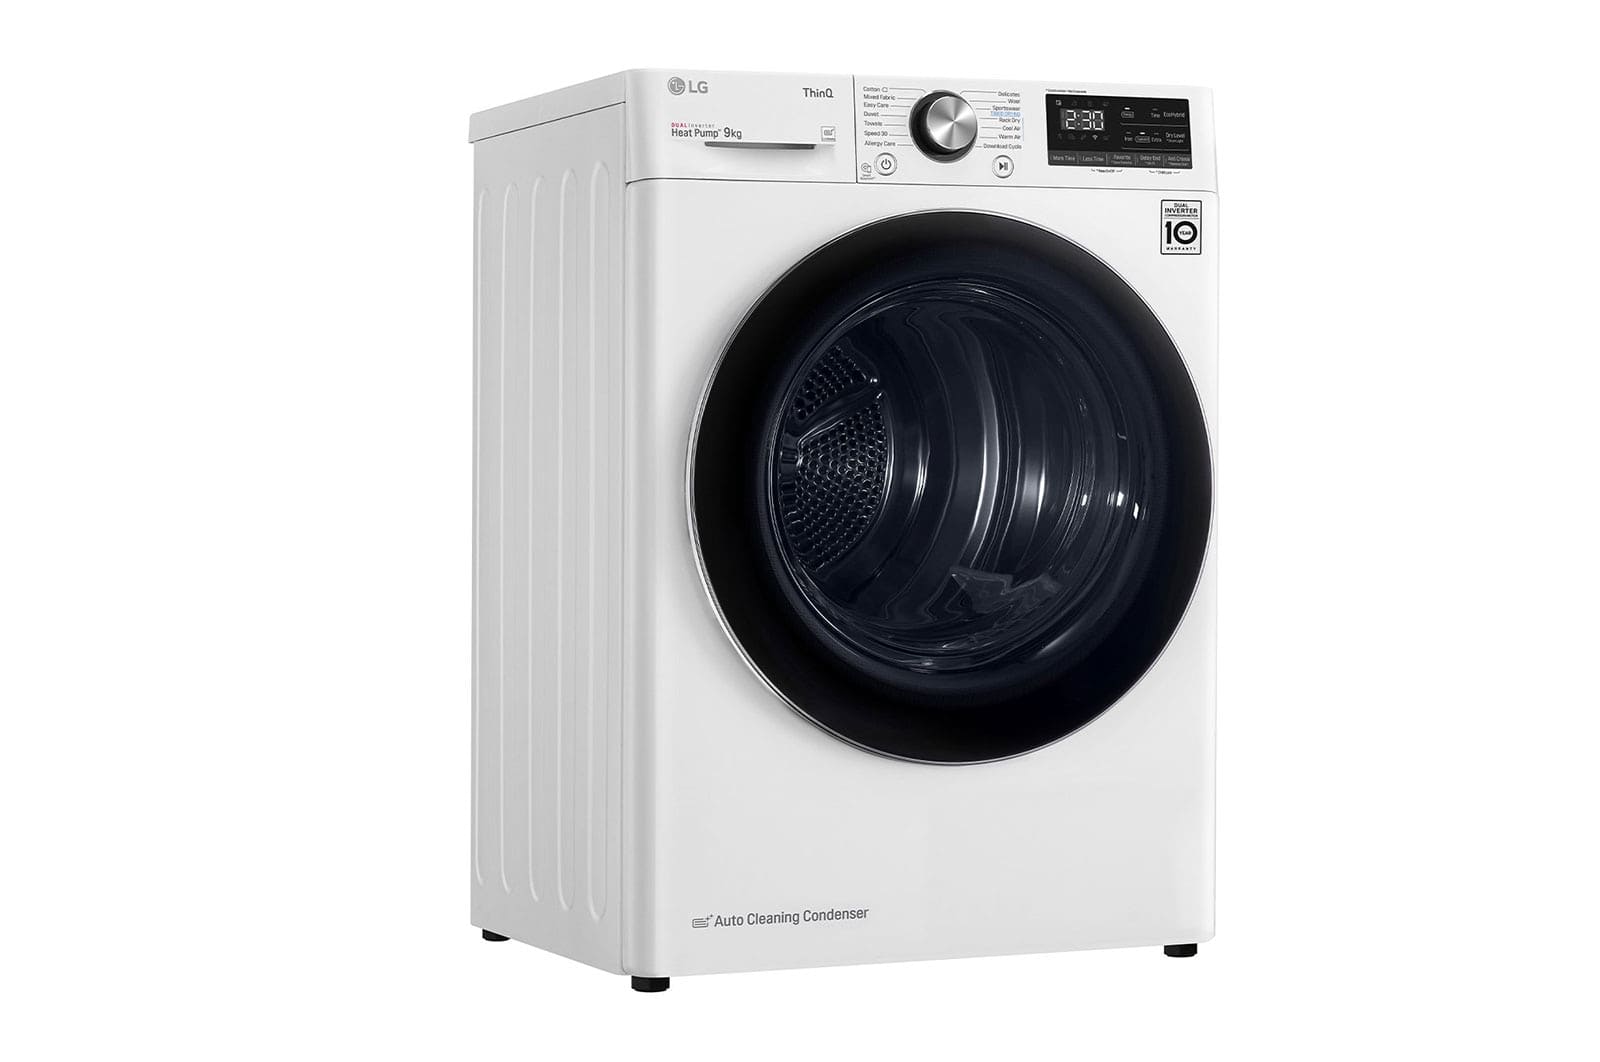 LG-Dryer-9kg-2.jpg